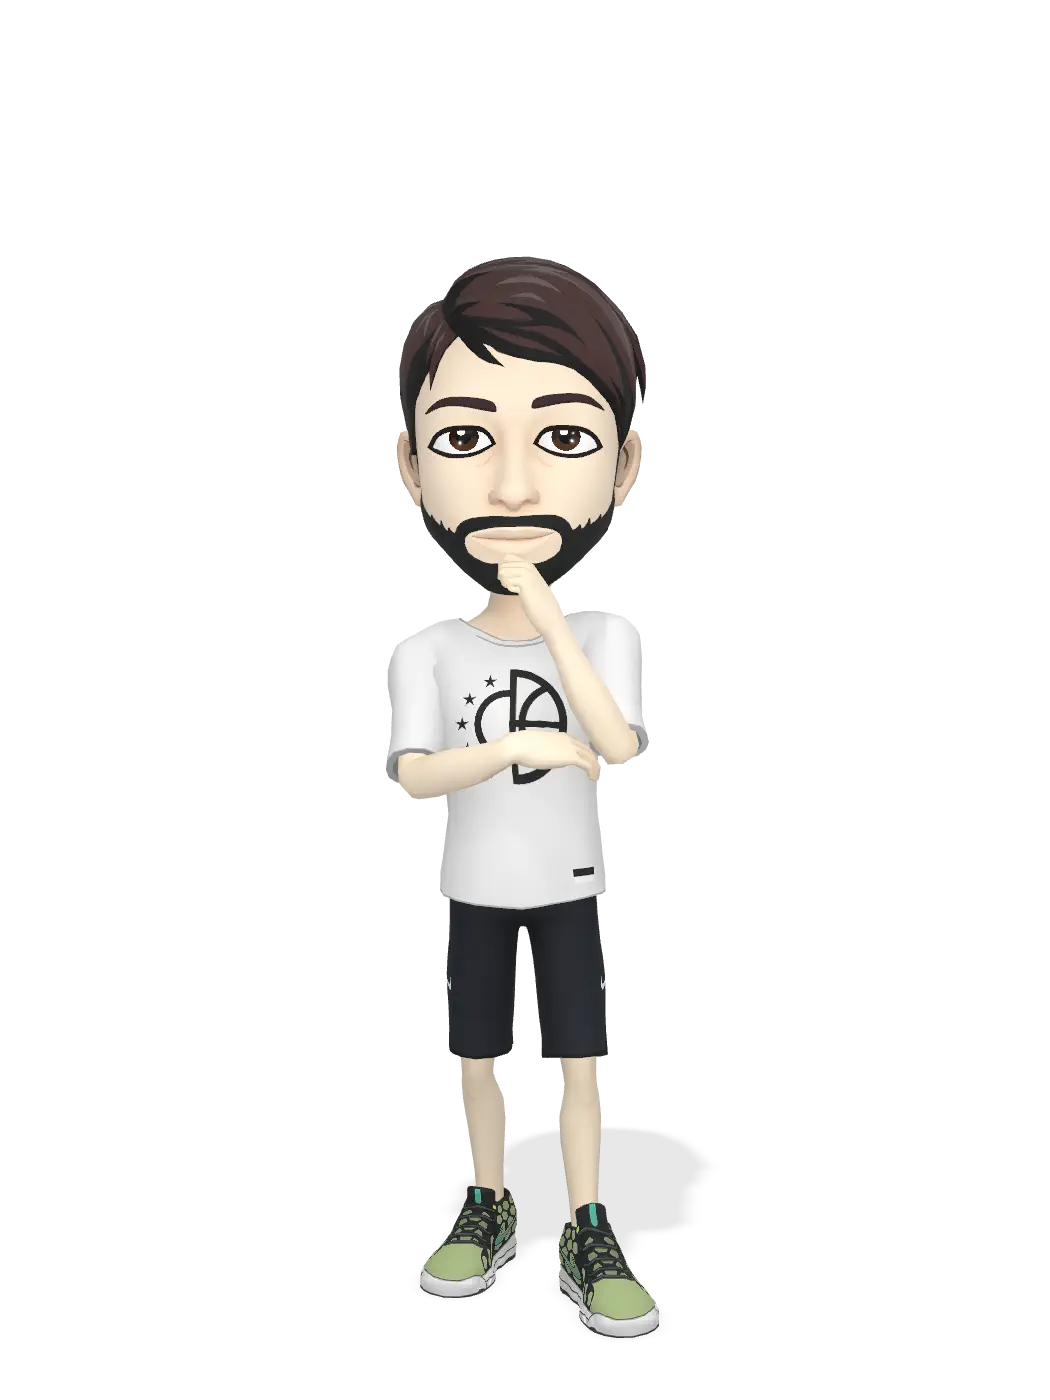 3D Bitmoji for david_celtics avatar